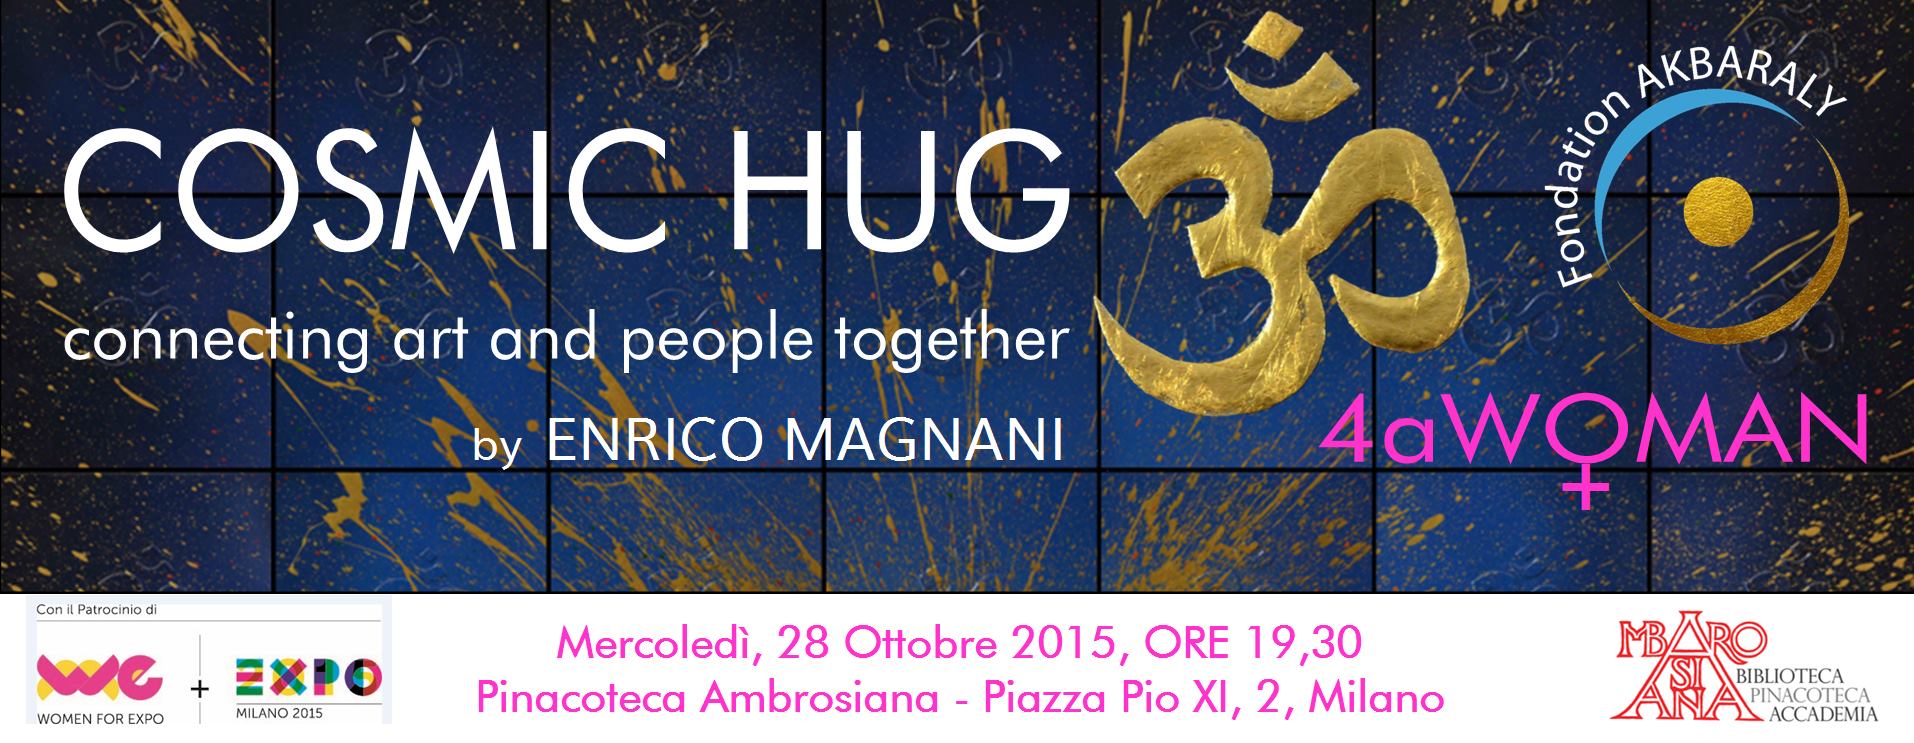 ENRICO MAGNANI, cosmic hug, 4awoman, akbaraly, foundation, milano, pinacoteca, ambrosiana